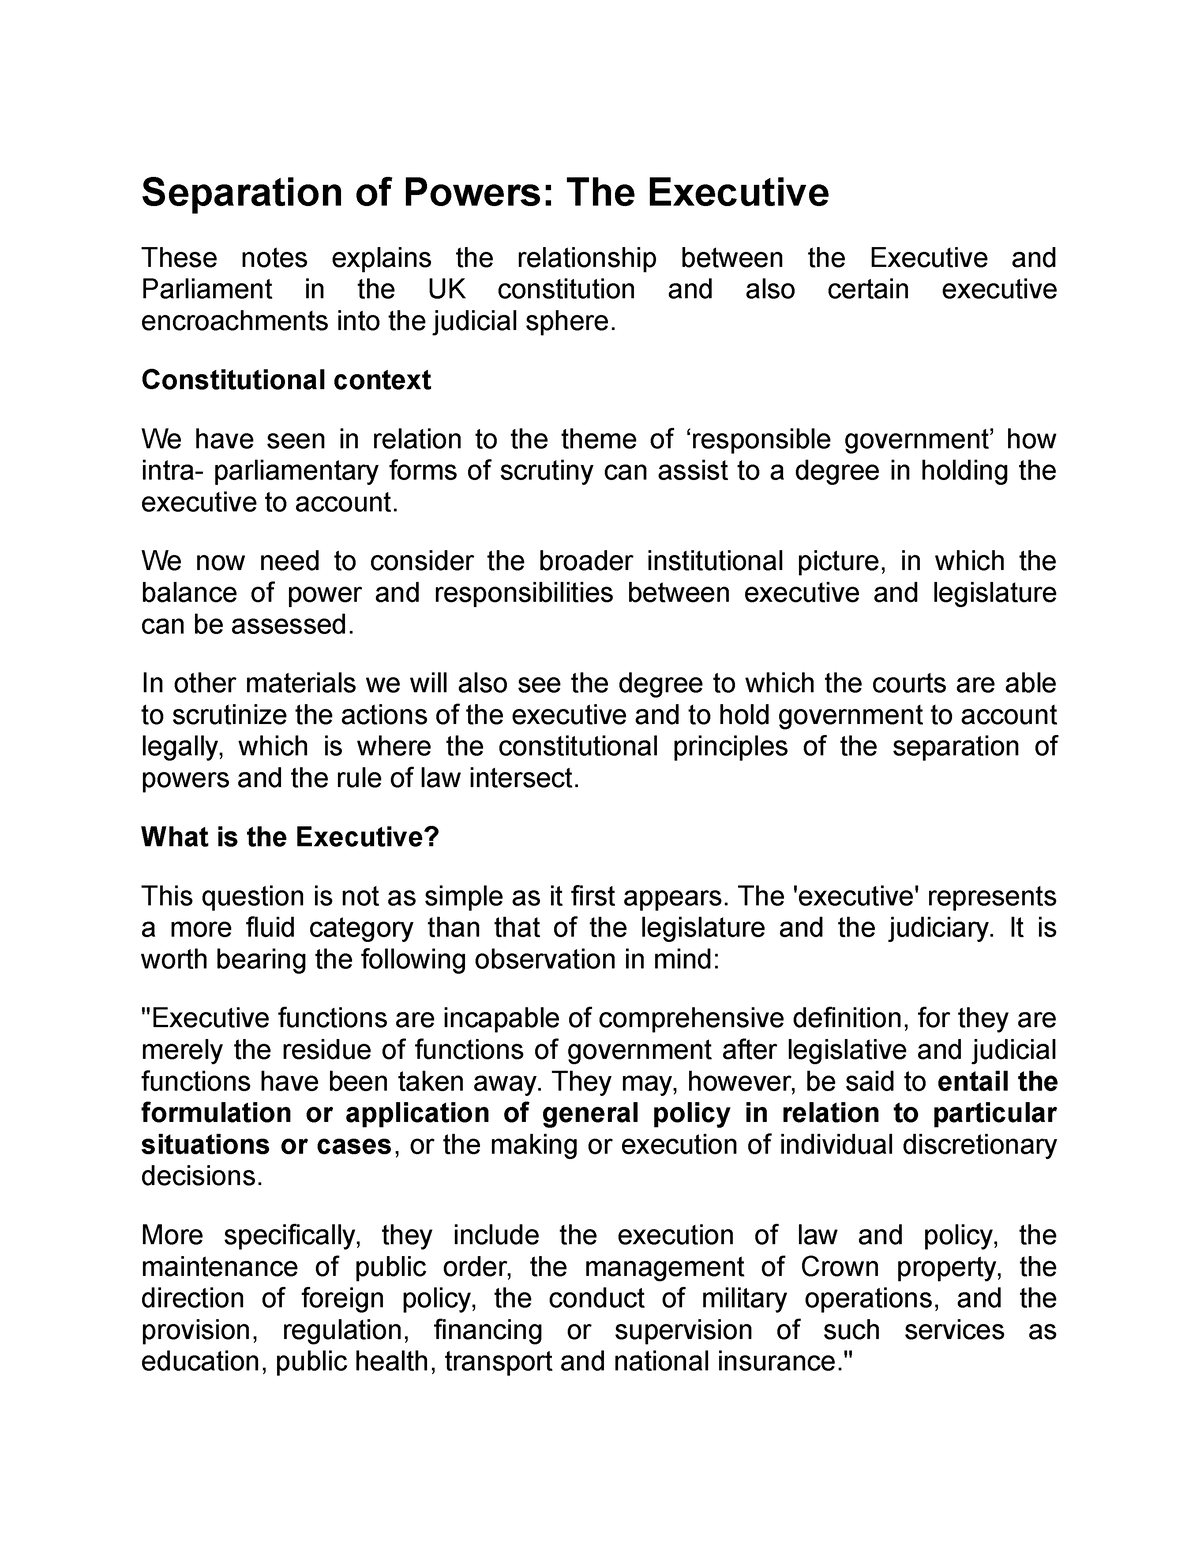 separation of powers public law essay